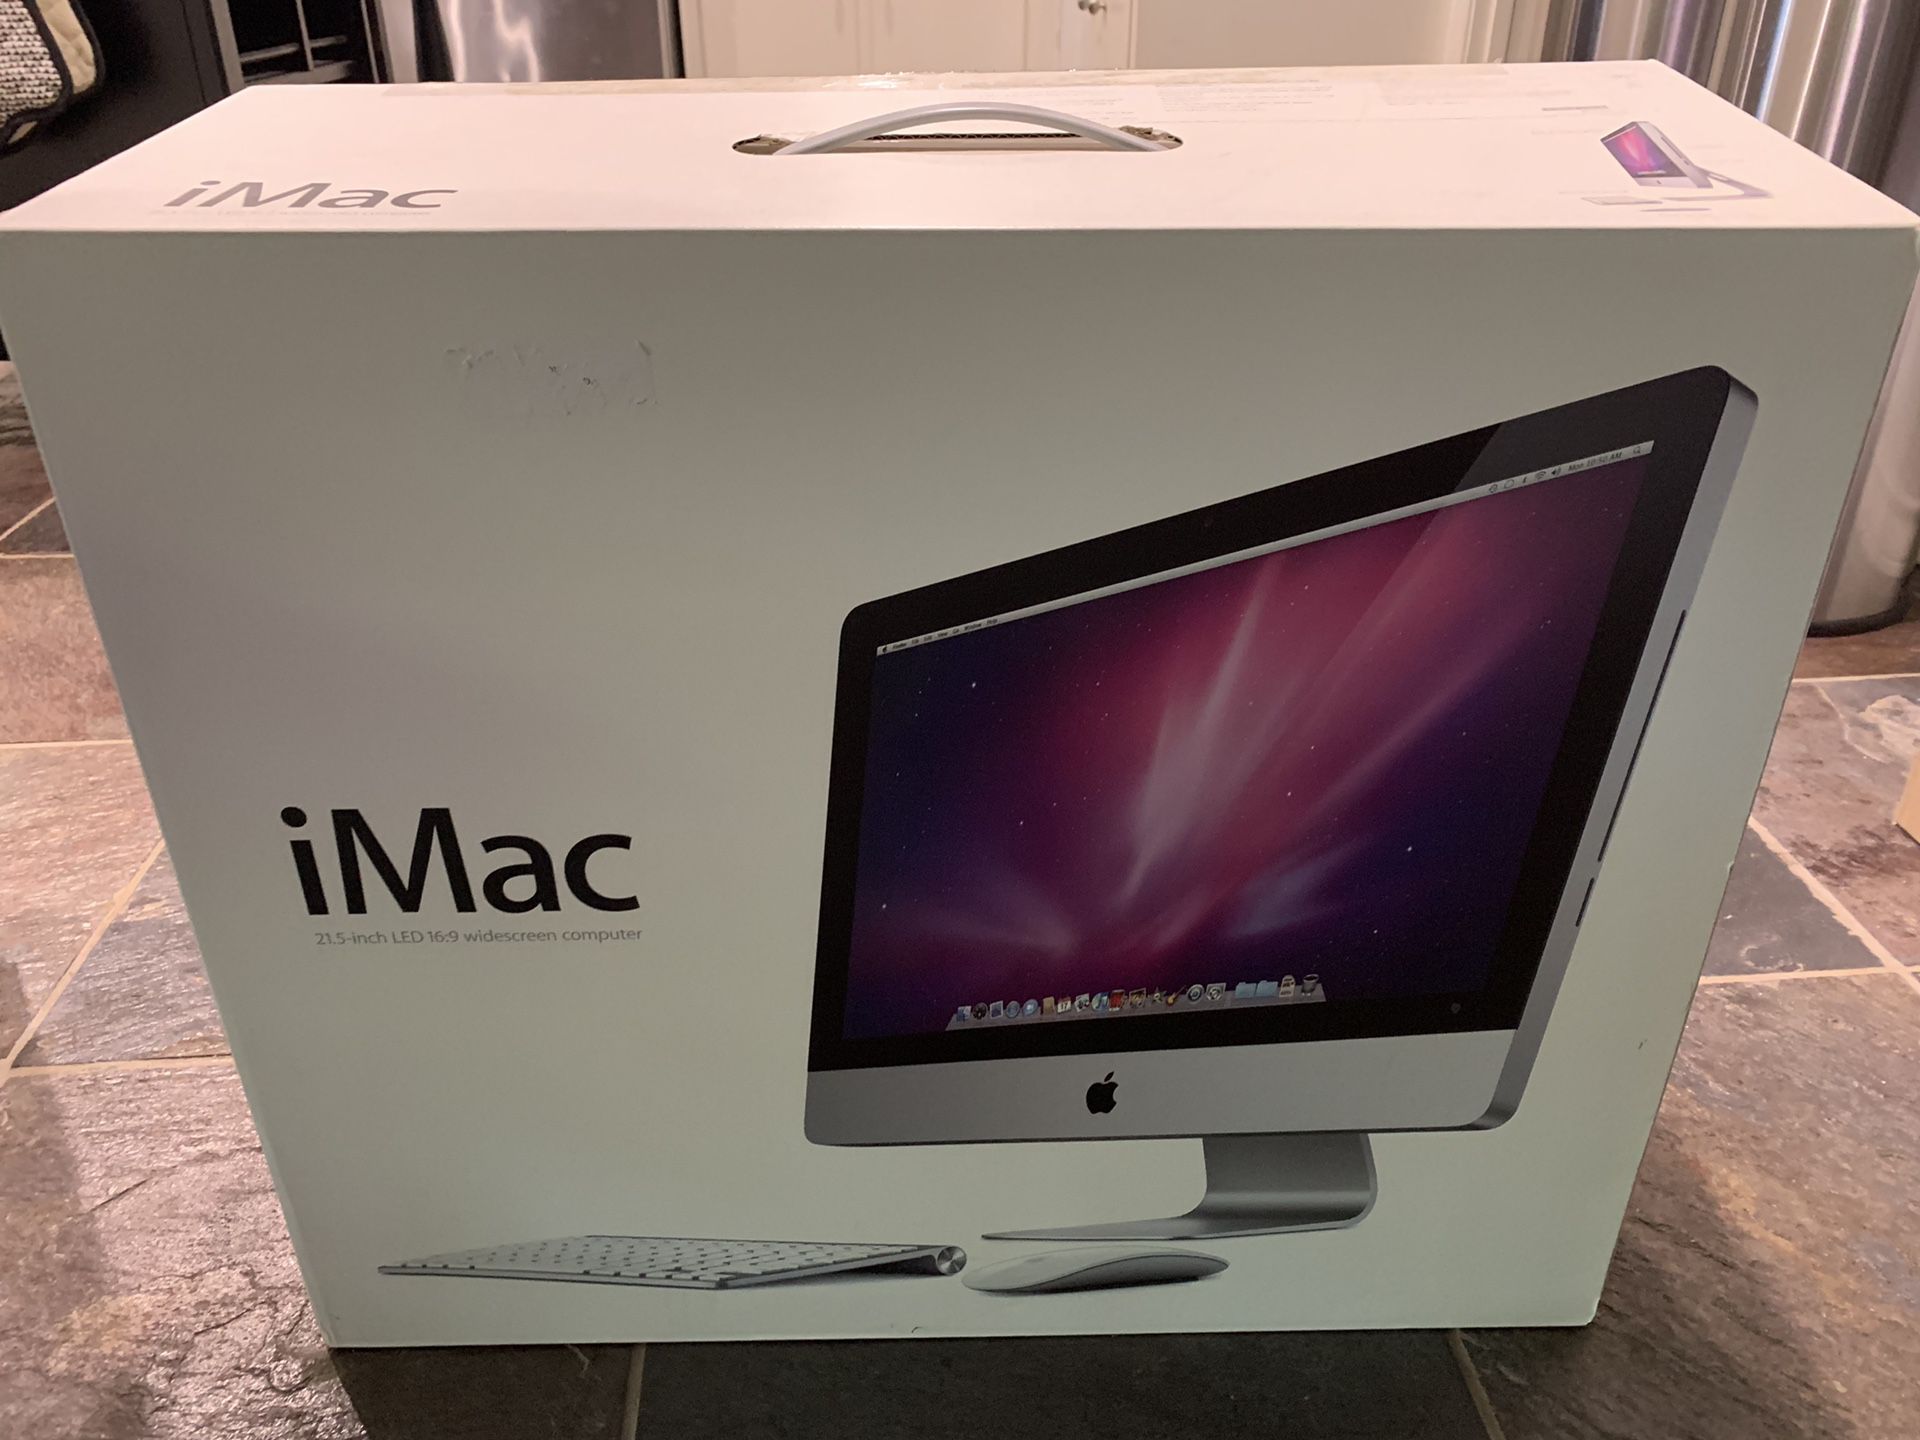 iMac - 21.5 inch Led 16:9 widescreen